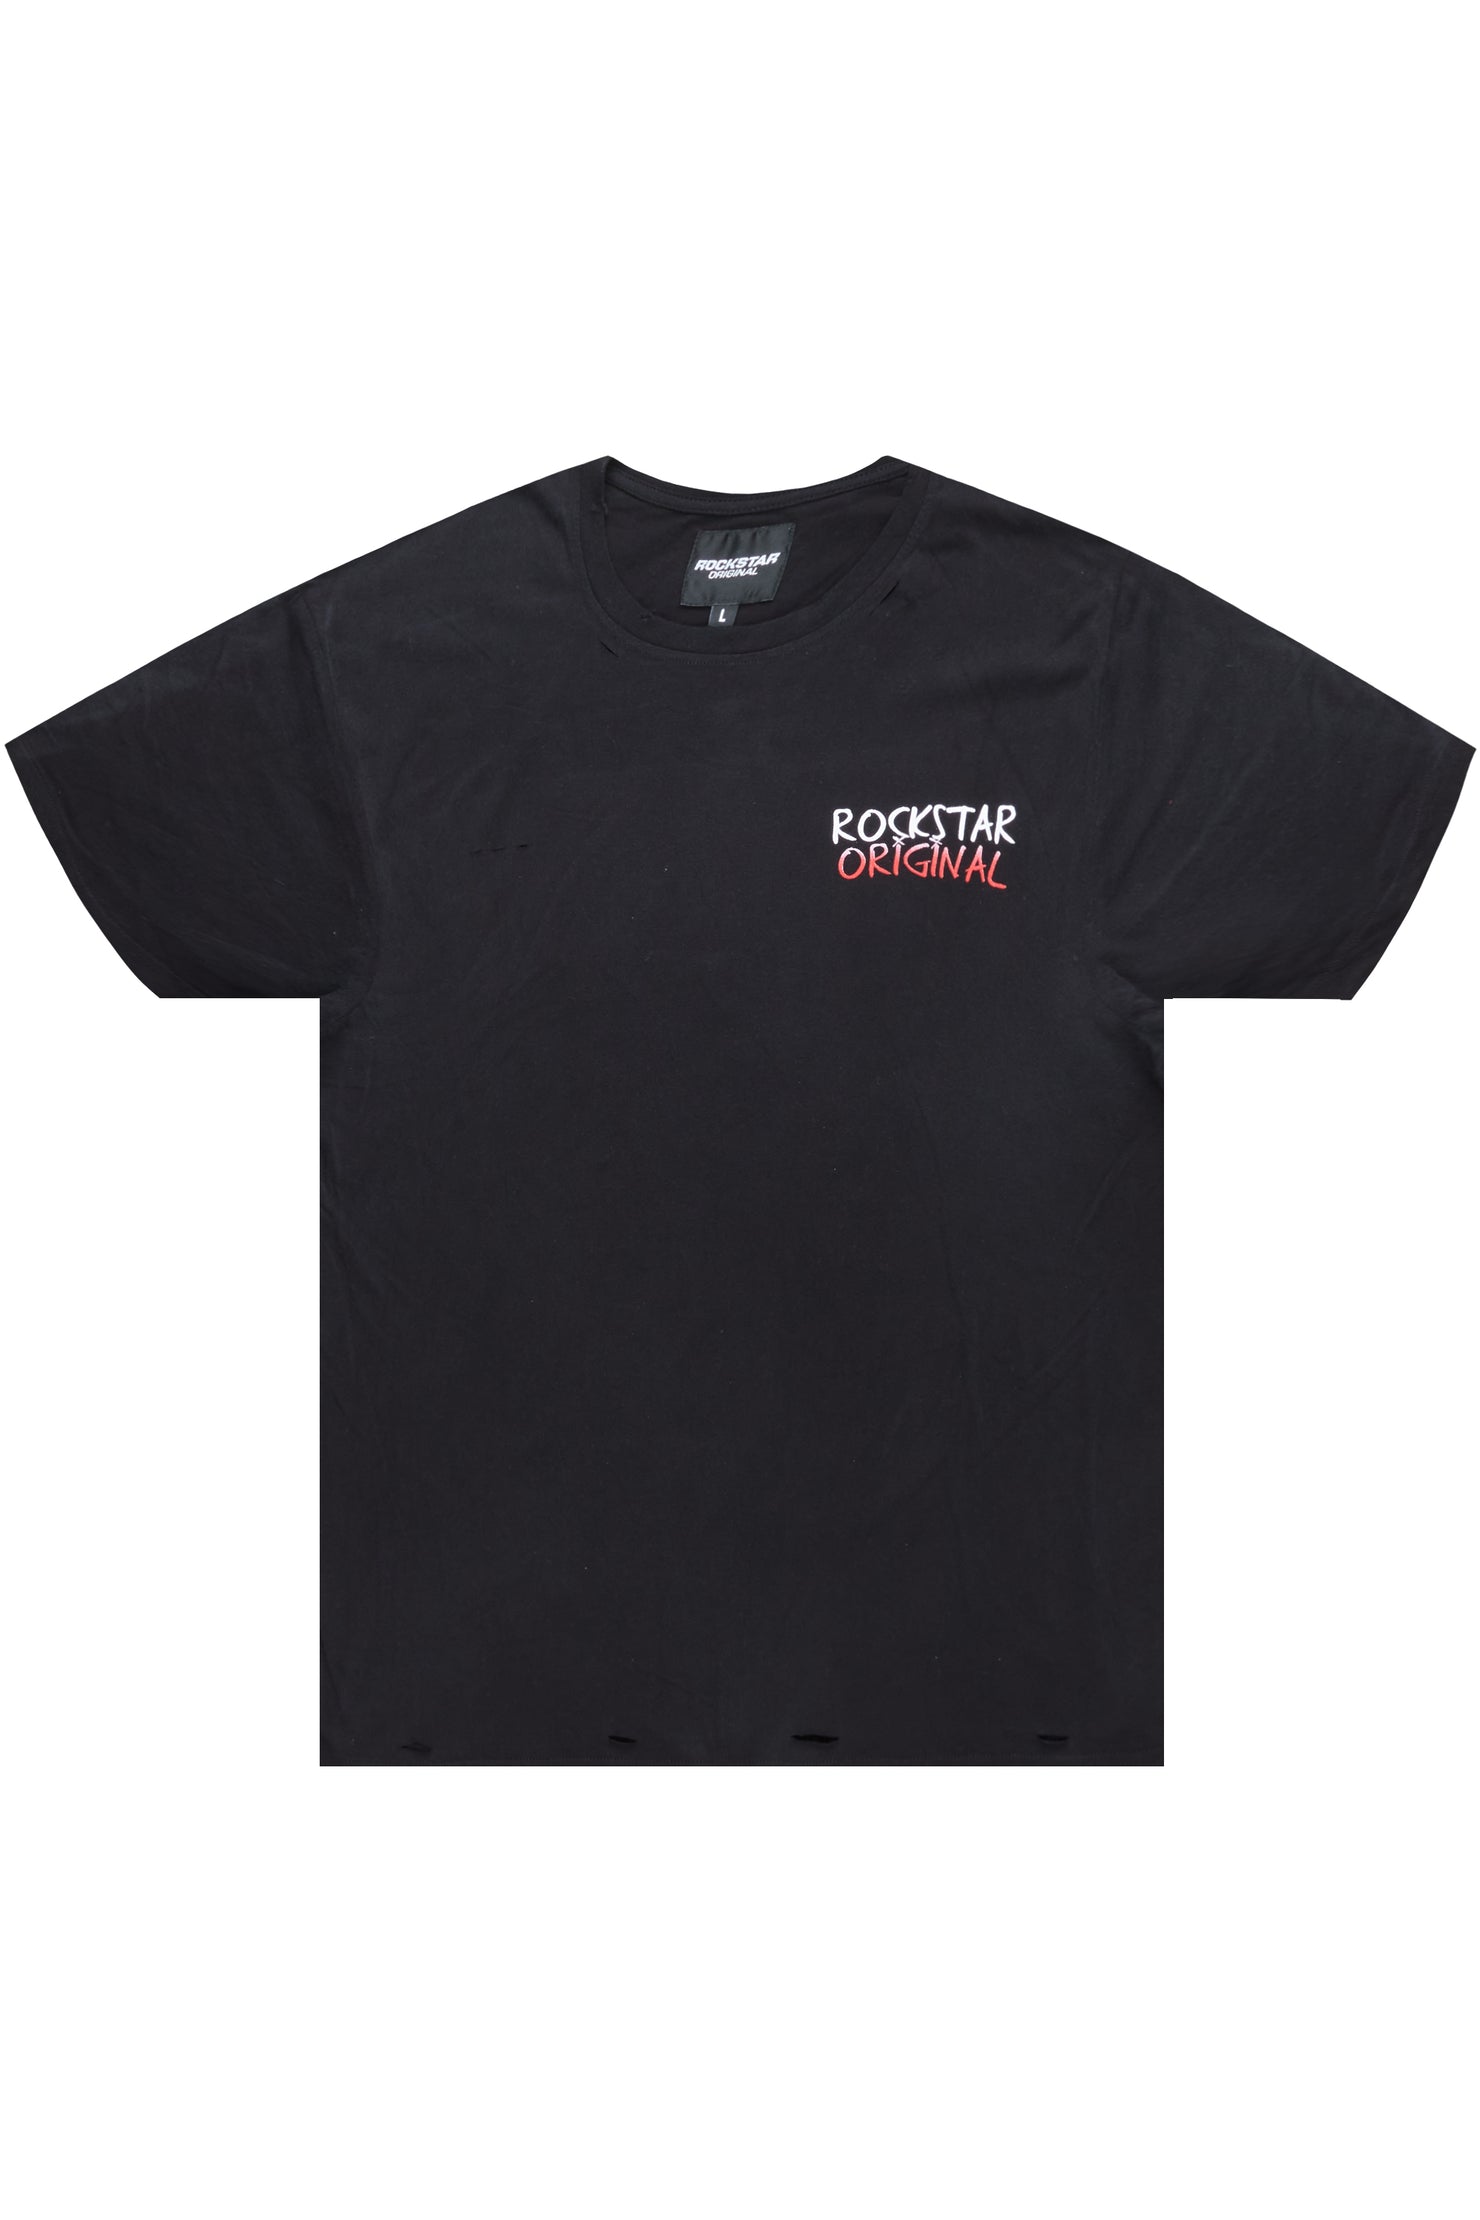 Keltone Black Graphic T-Shirt